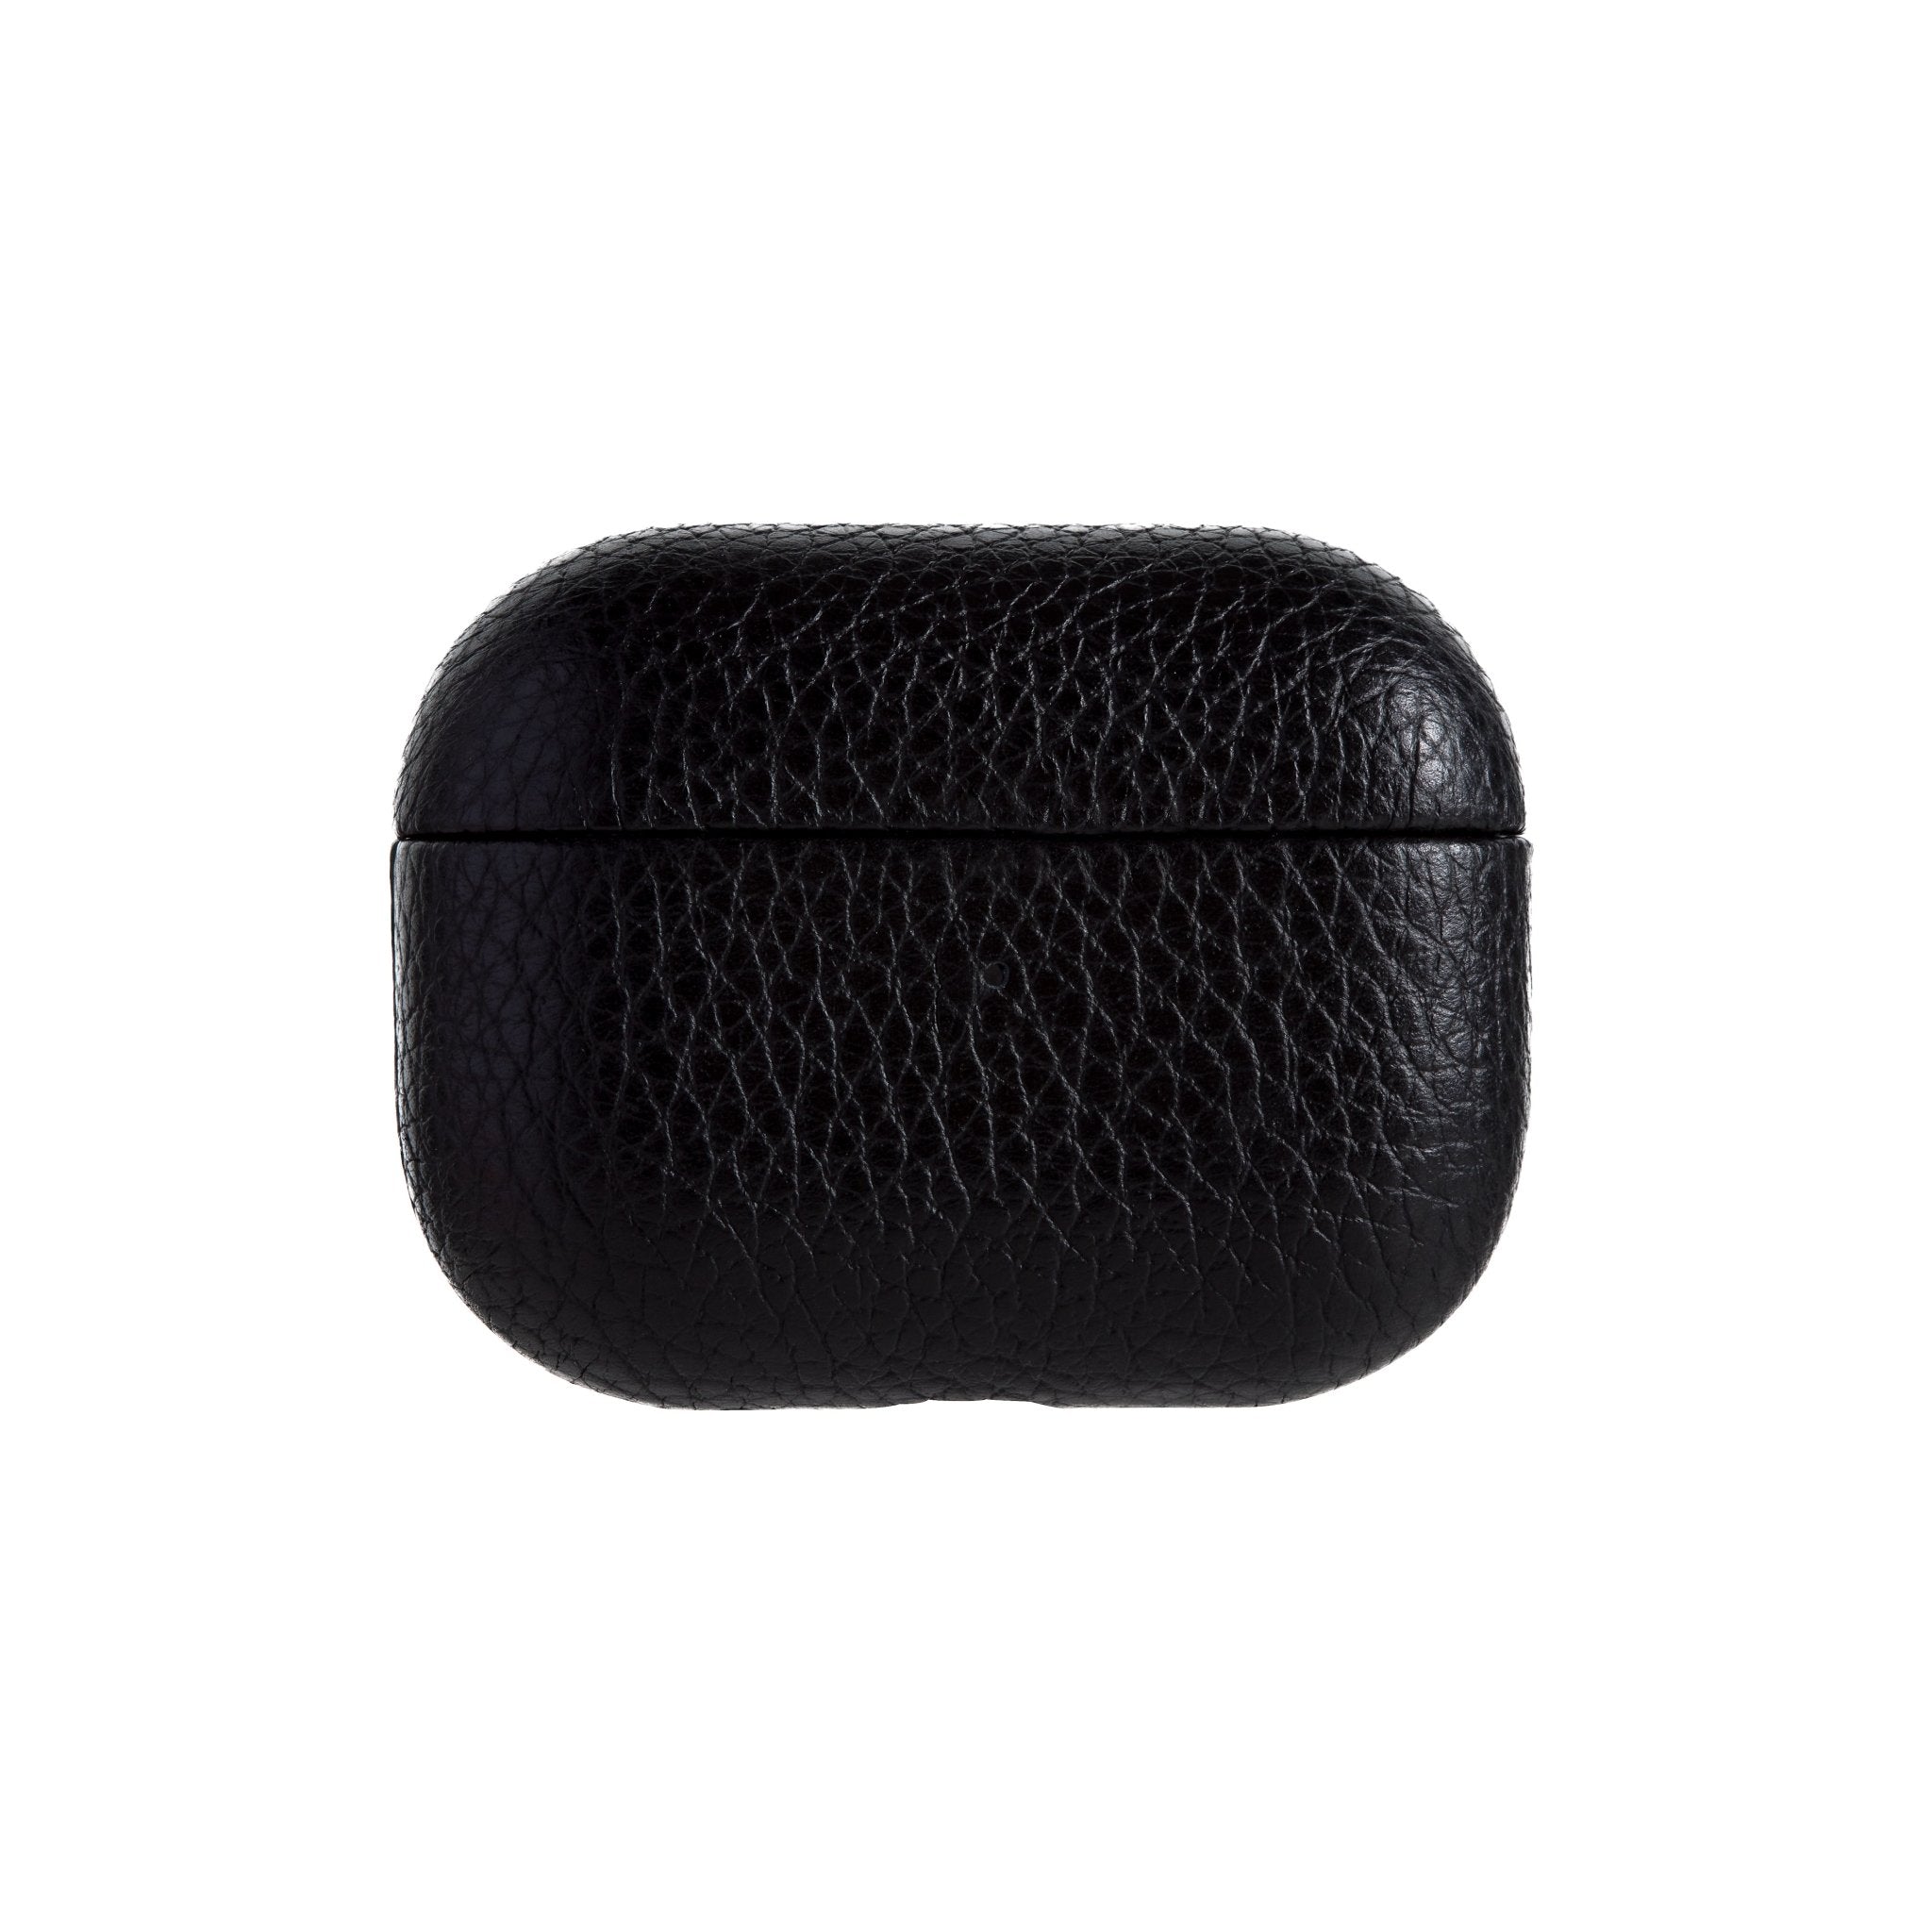 Ubique Italy Luxury AirPods Pro 2 Case Pebble Grain Leather Black Front